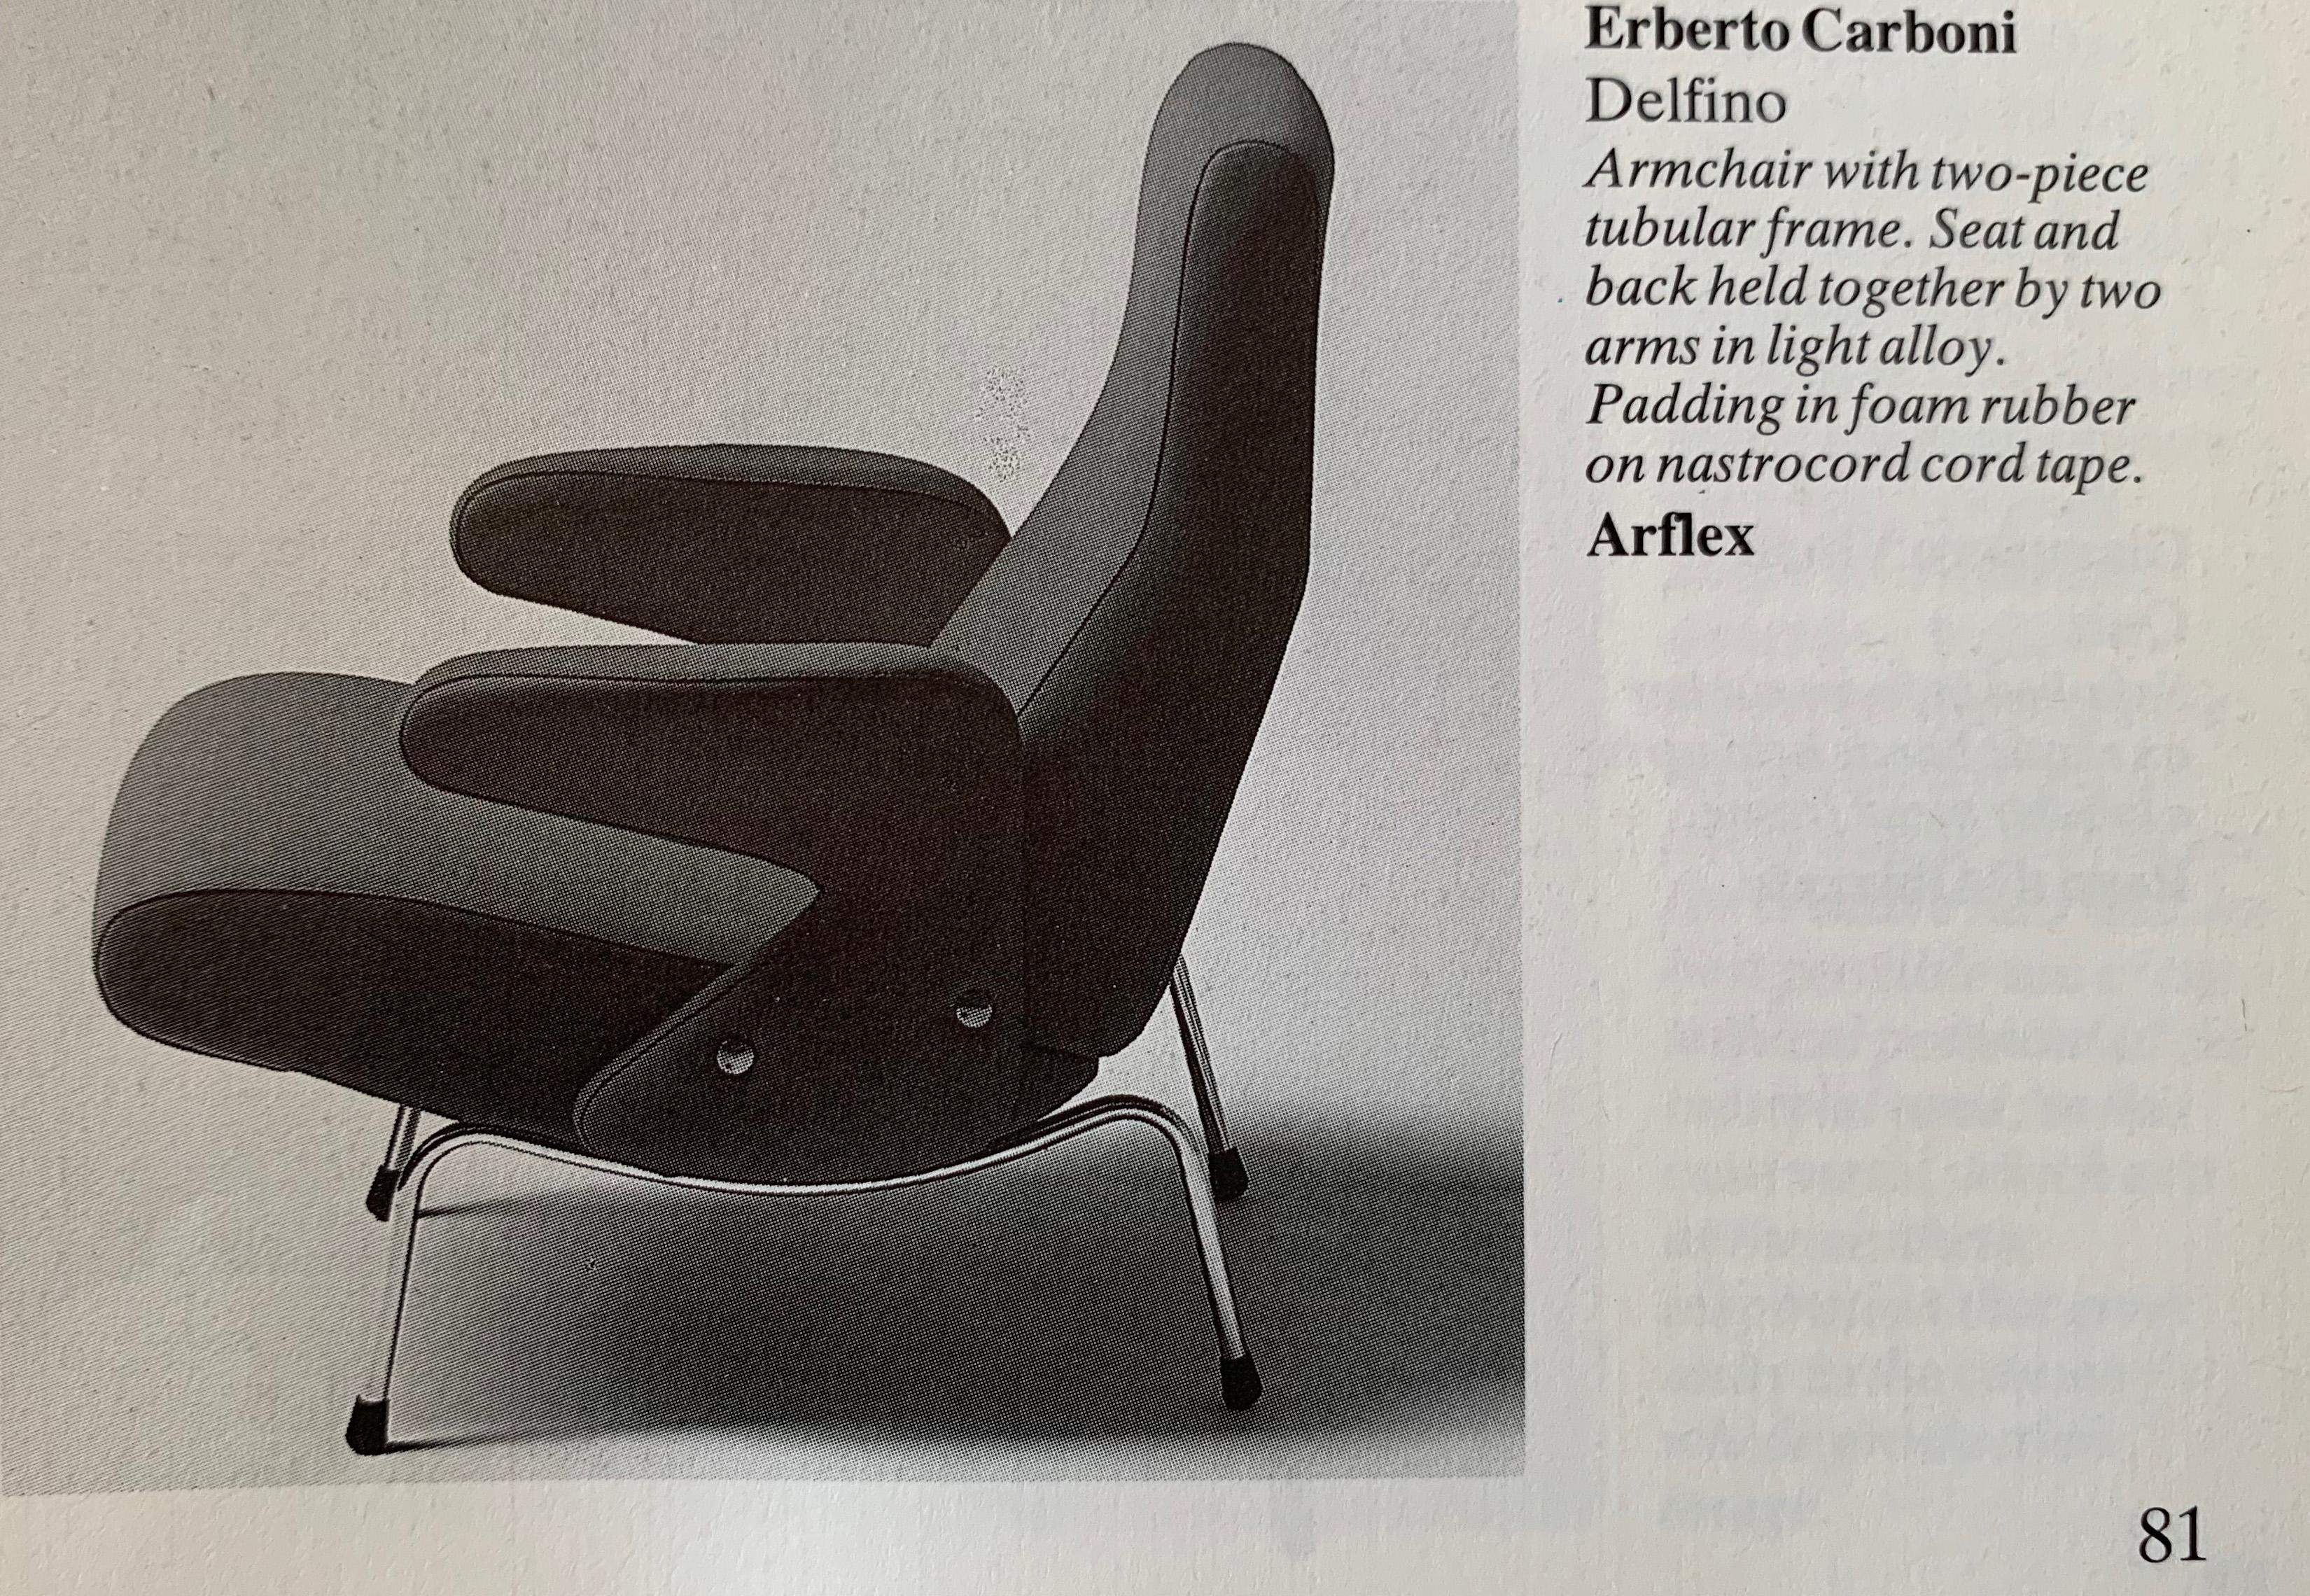 Fabric Erberto Carboni for Arflex Light Blue Delfino Chair with Chrome Legs, 1955